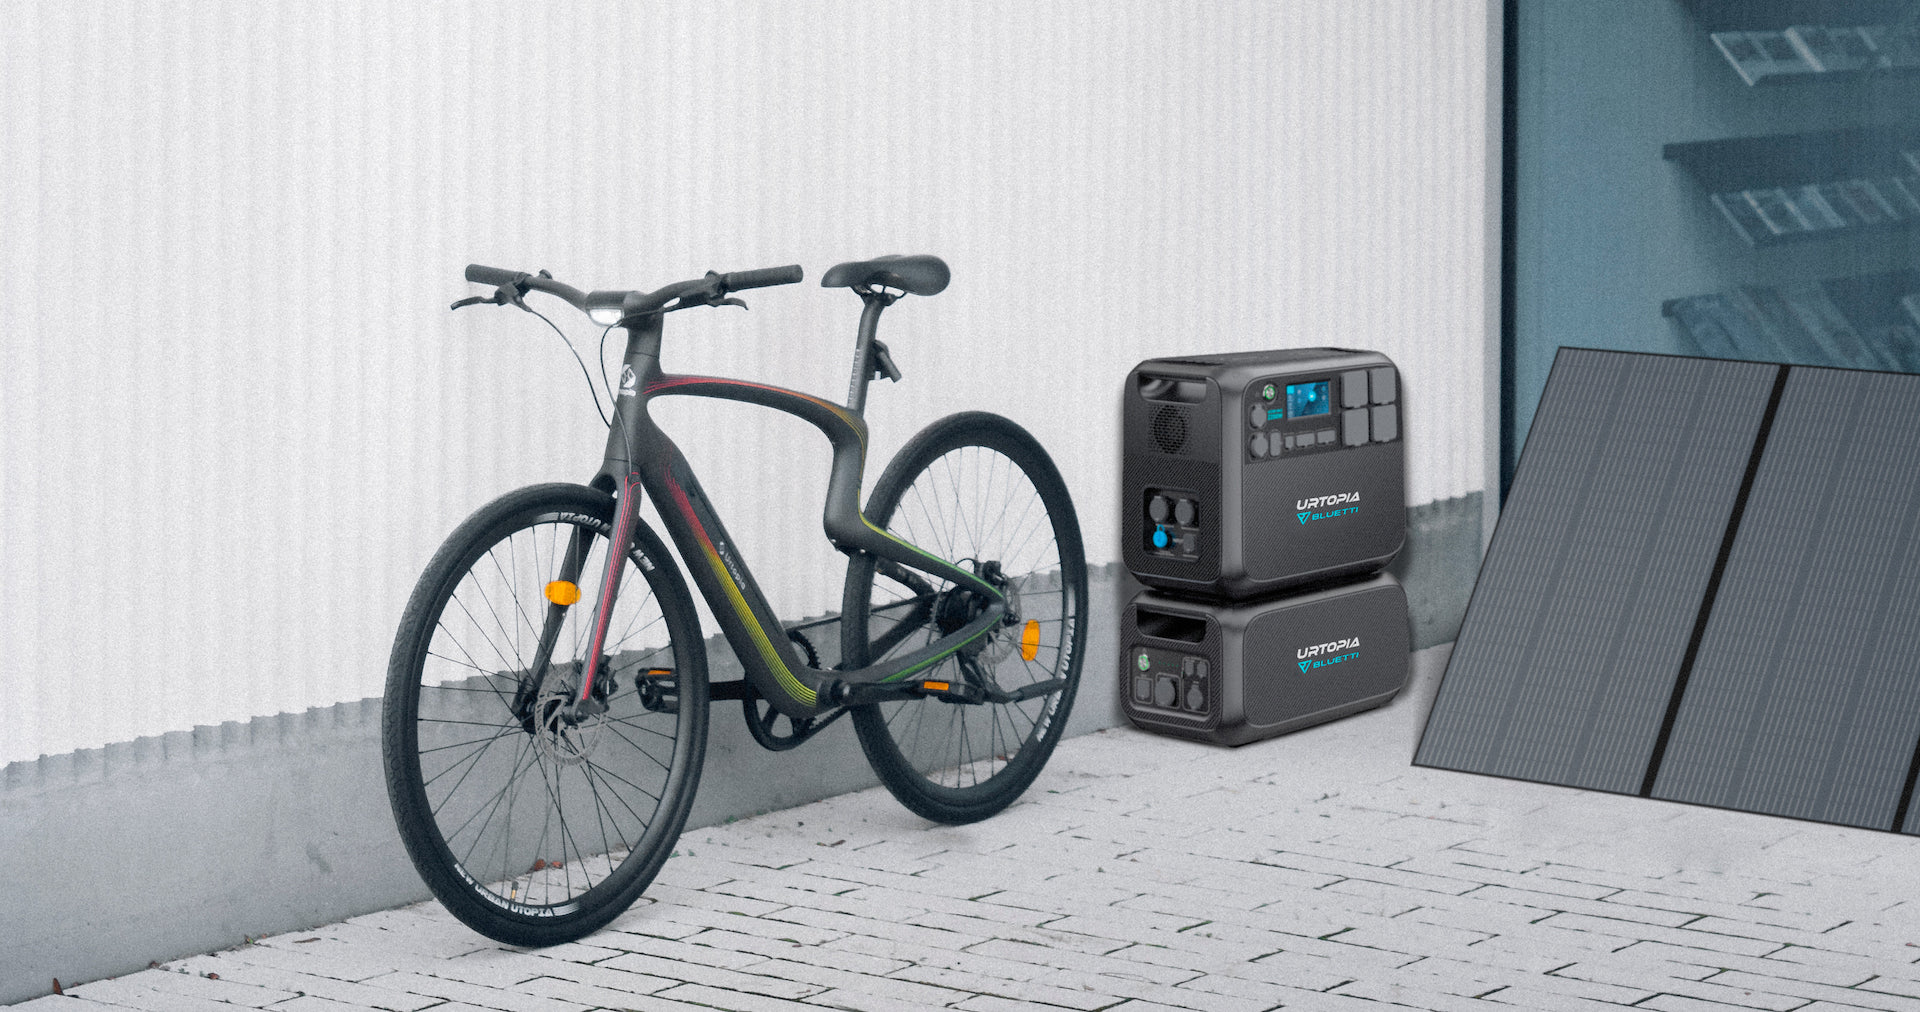 Urtopia electric bike charging using solar power